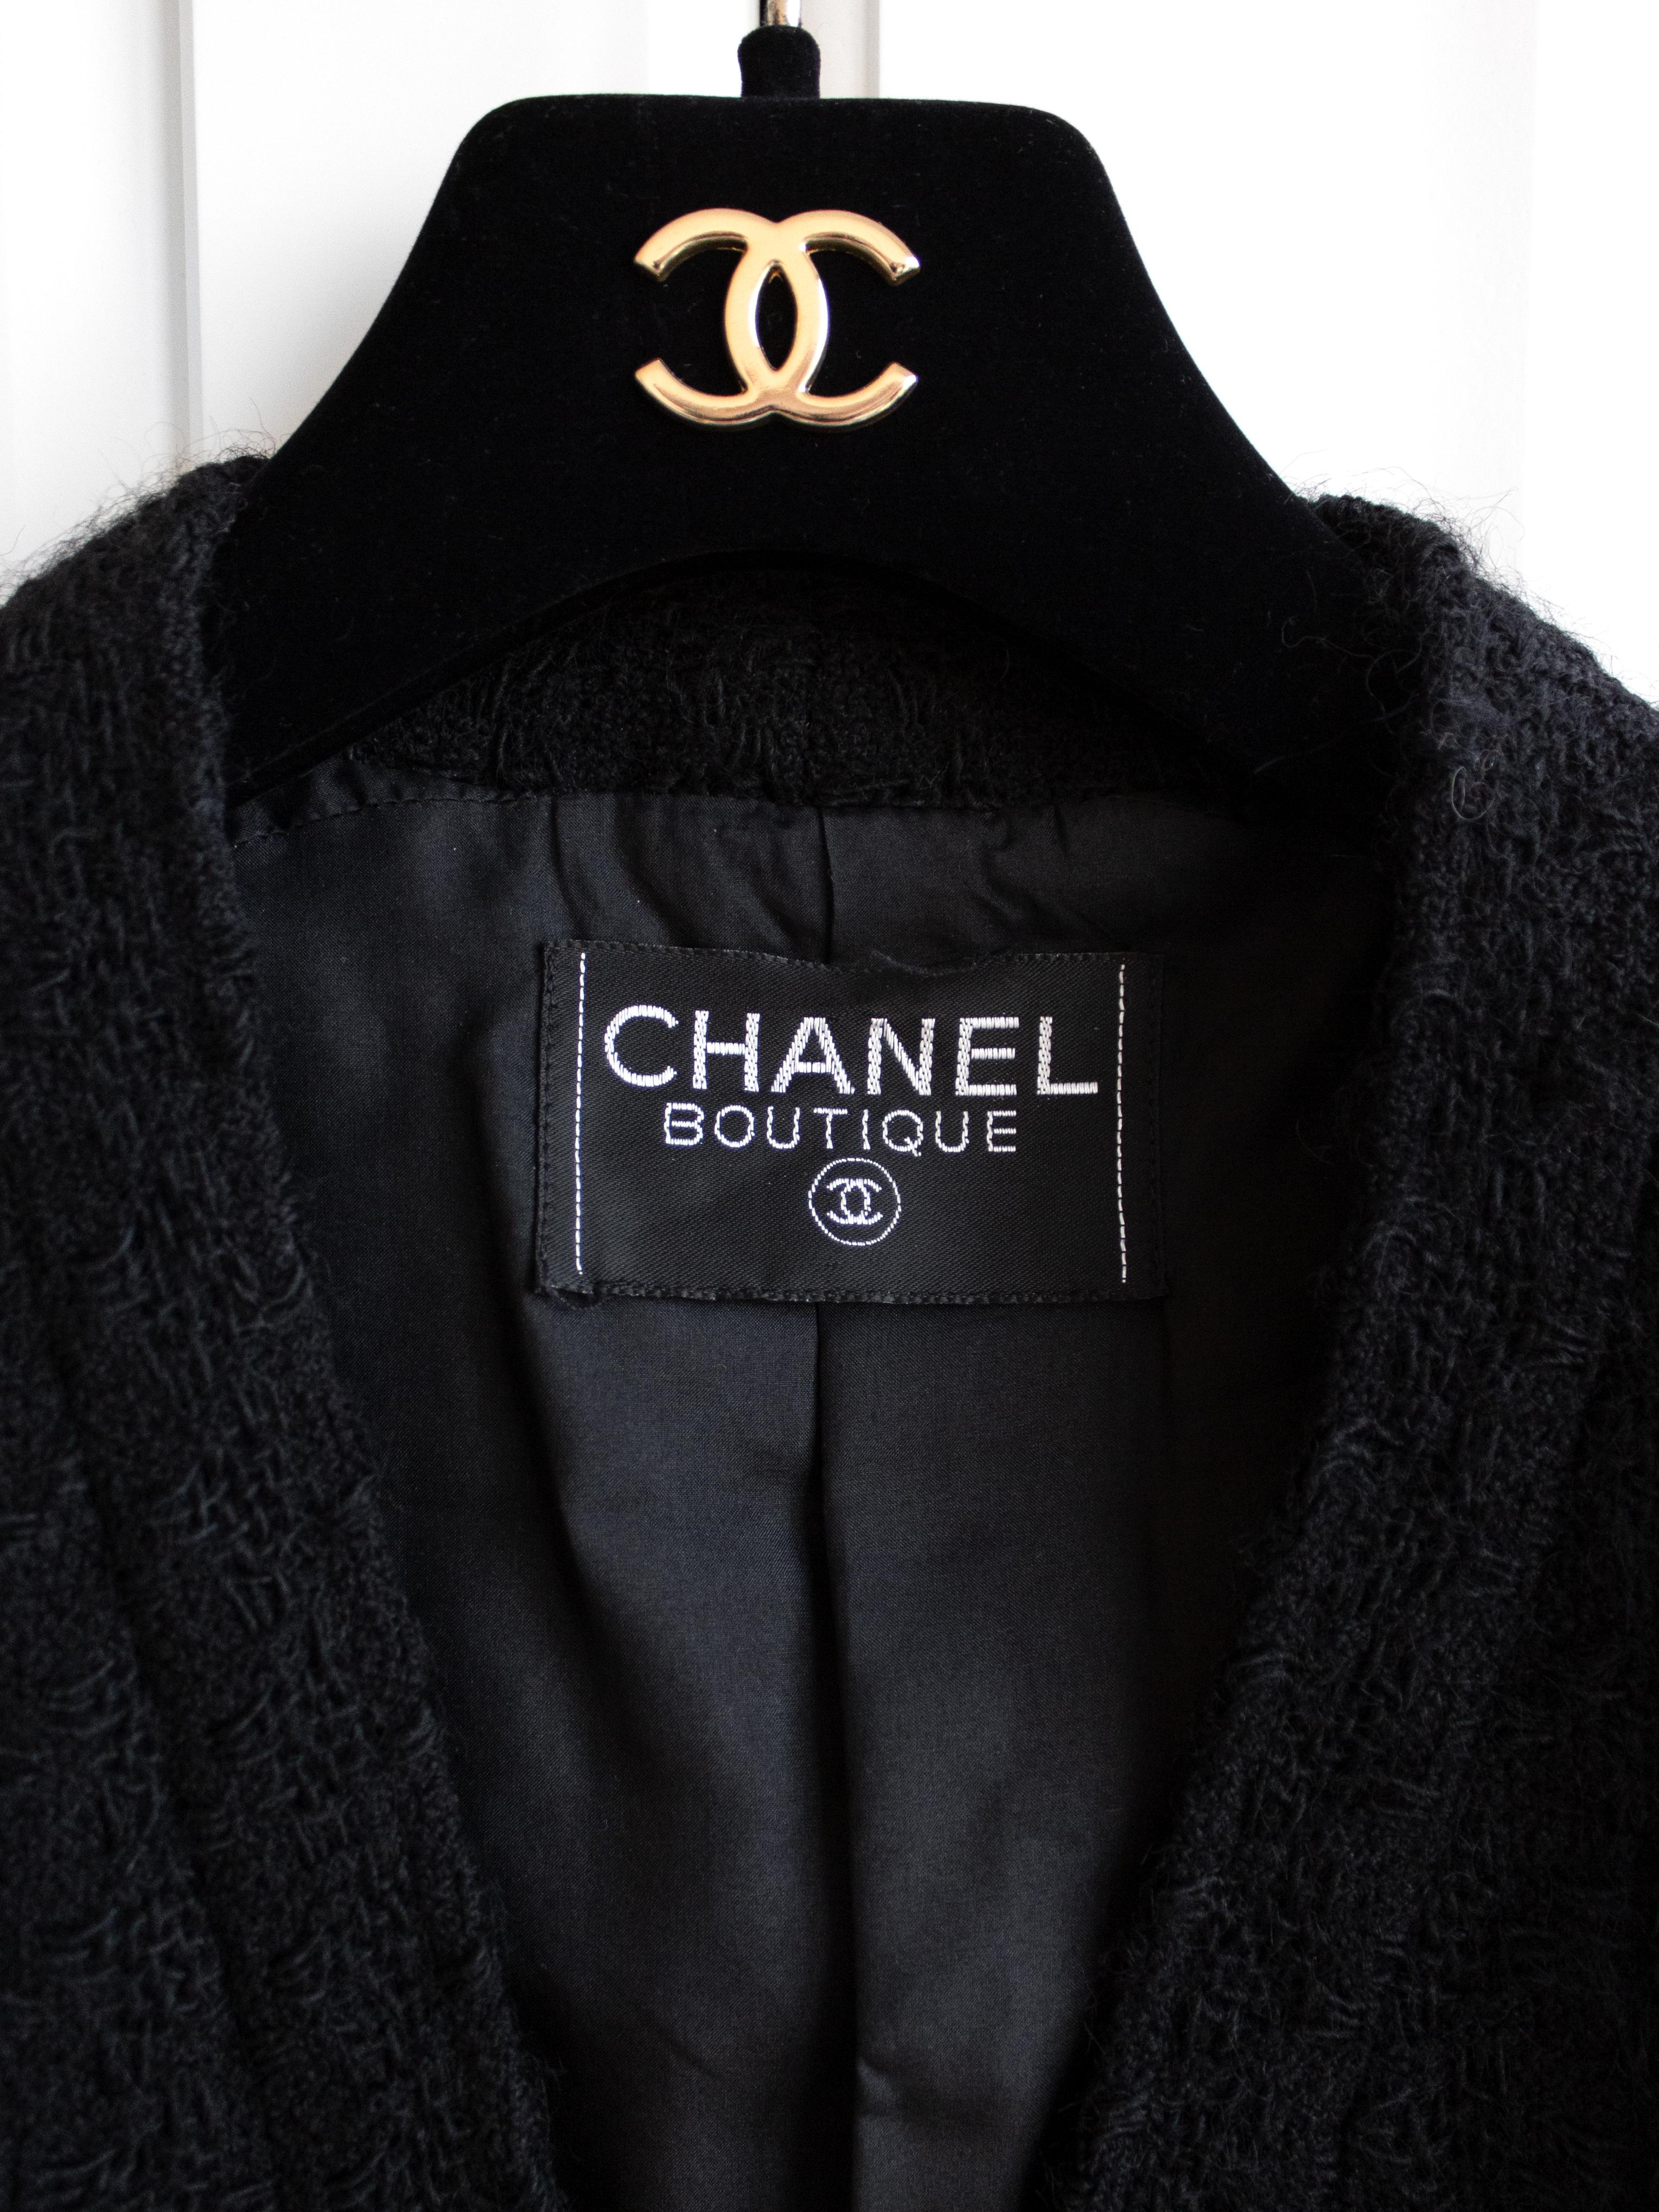 Chanel Vintage Fall Winter 1985 Black Gold 1980s LBJ Tweed Jacket Skirt Suit 2